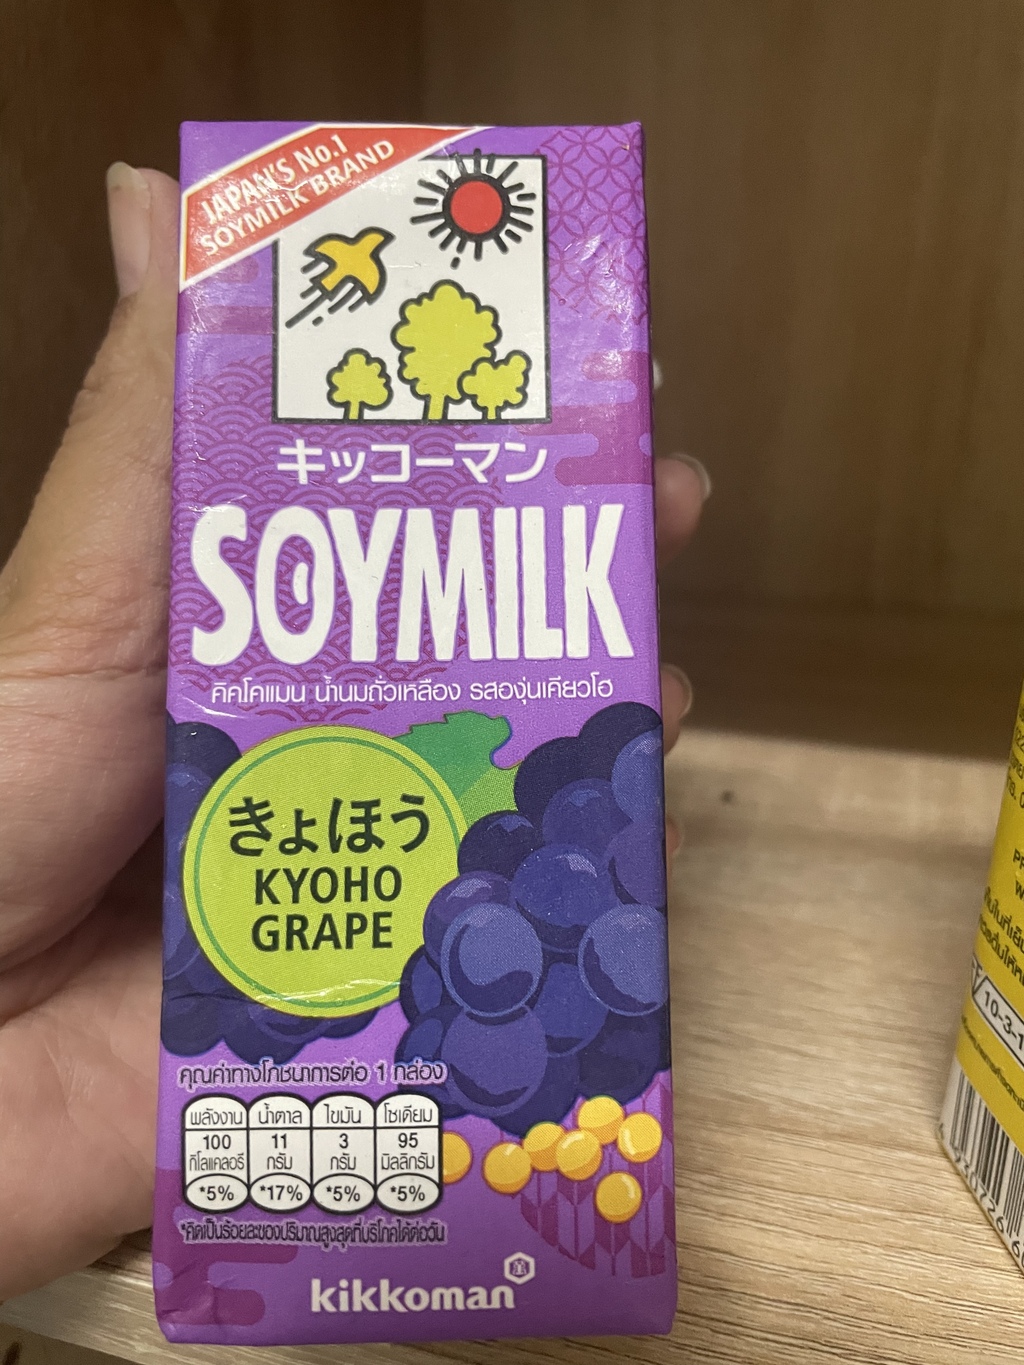 Kikkoman soy milk KYOHO GRAPE & CUSTARD PUDDING รีวิว